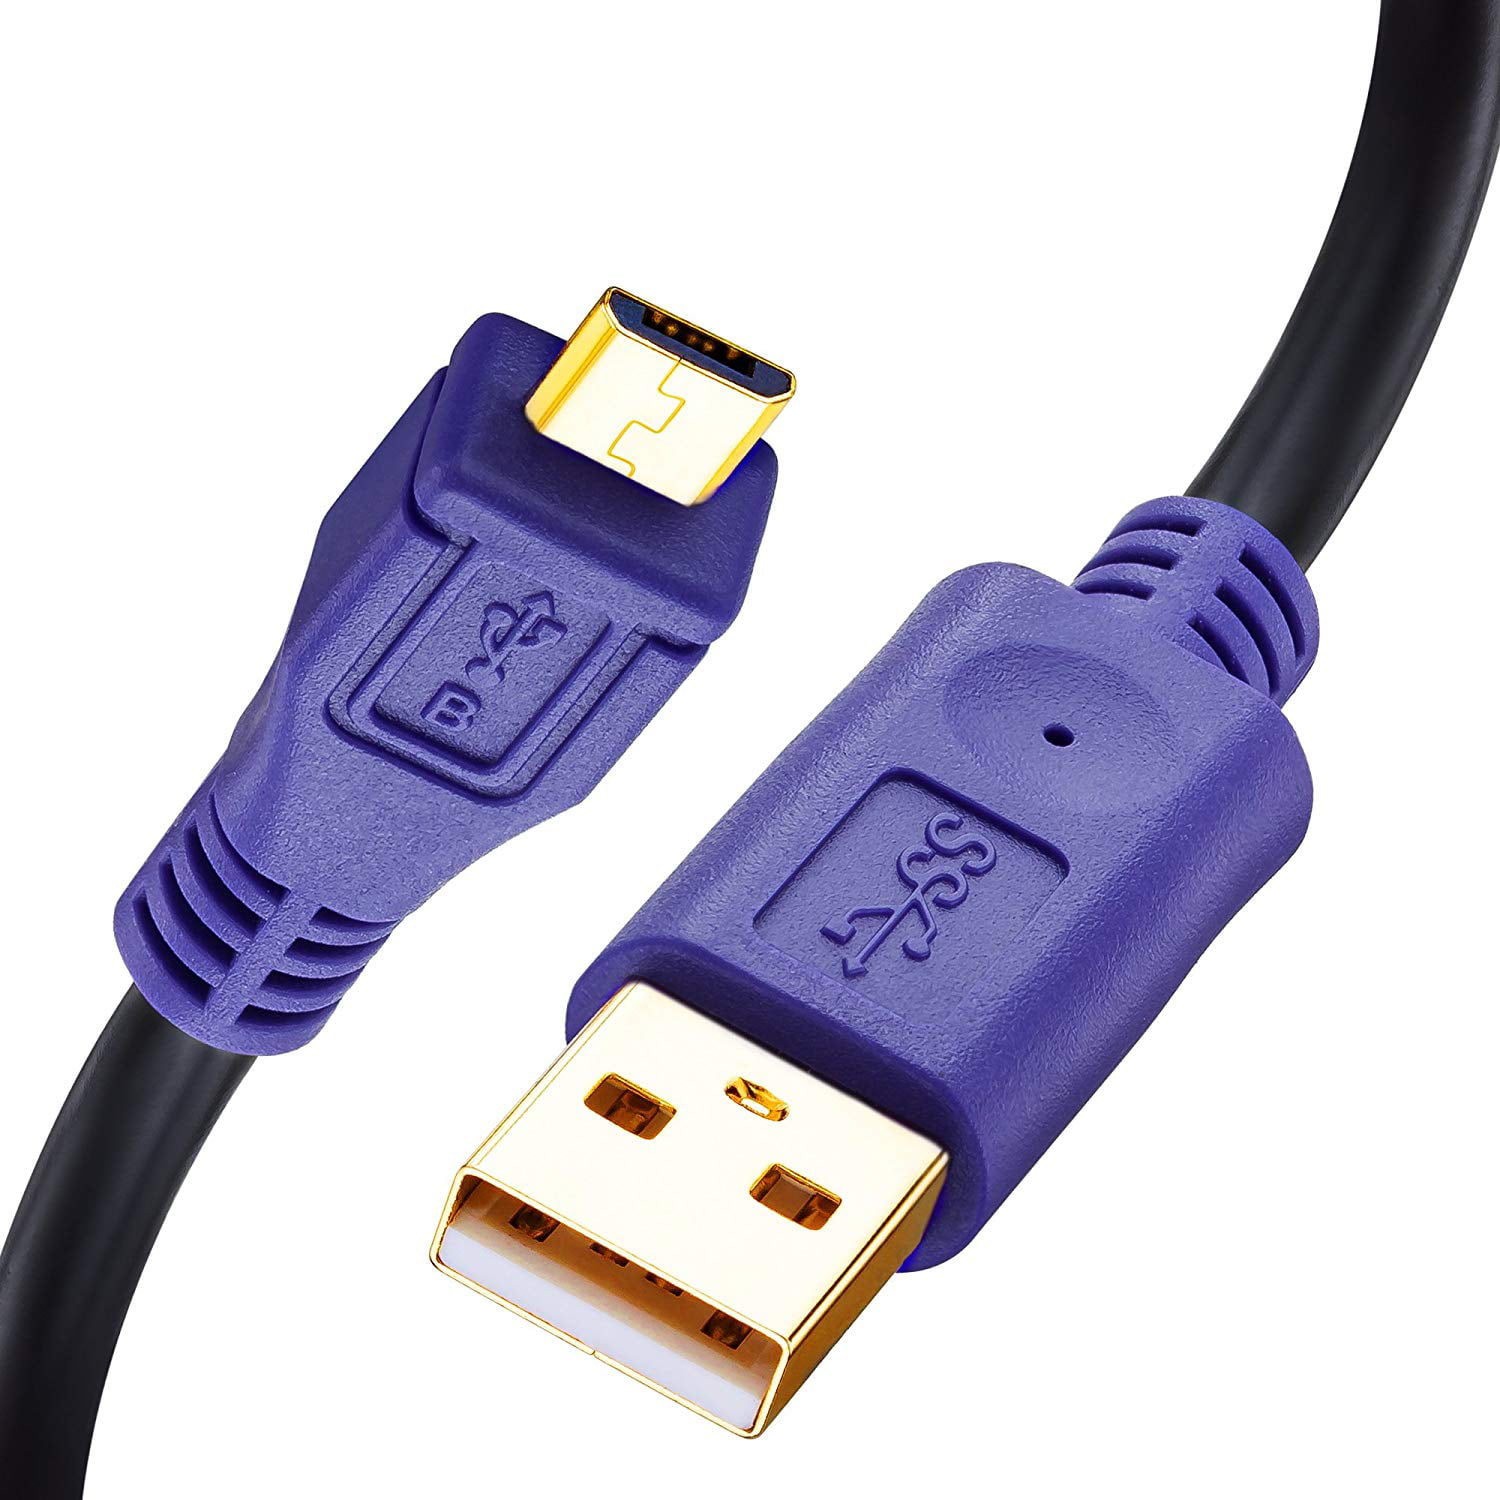 25 feet, Black ReadyPlug Universal USB 2.0 A to B Micro Cable Computer Charger Data 